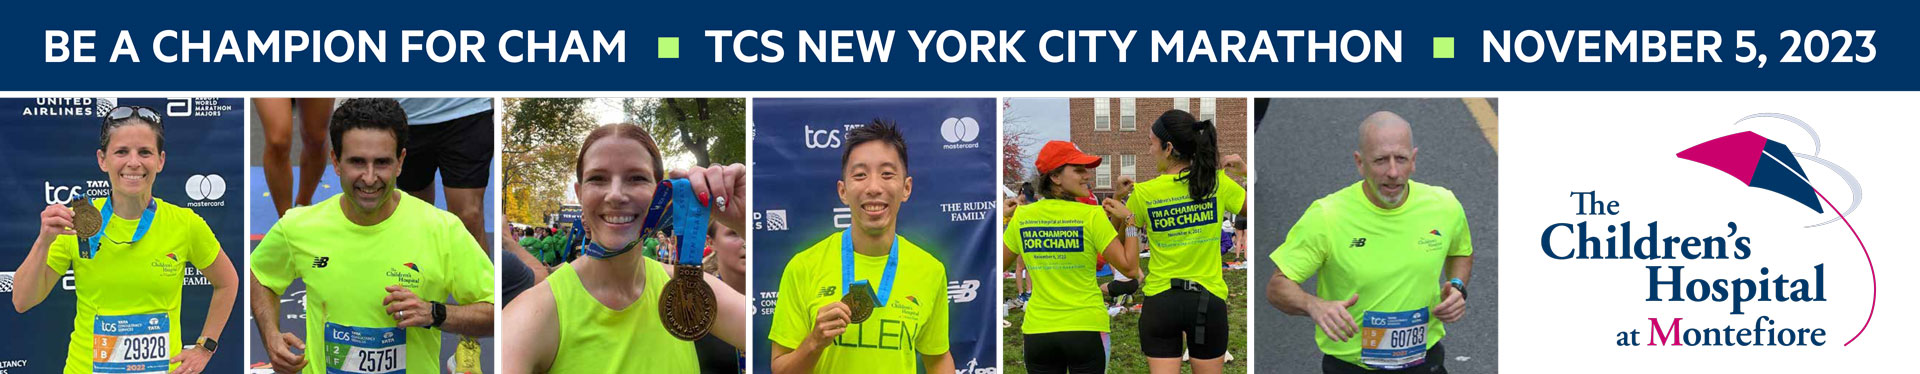 2023 TCS New York City Marathon Champions for CHAM